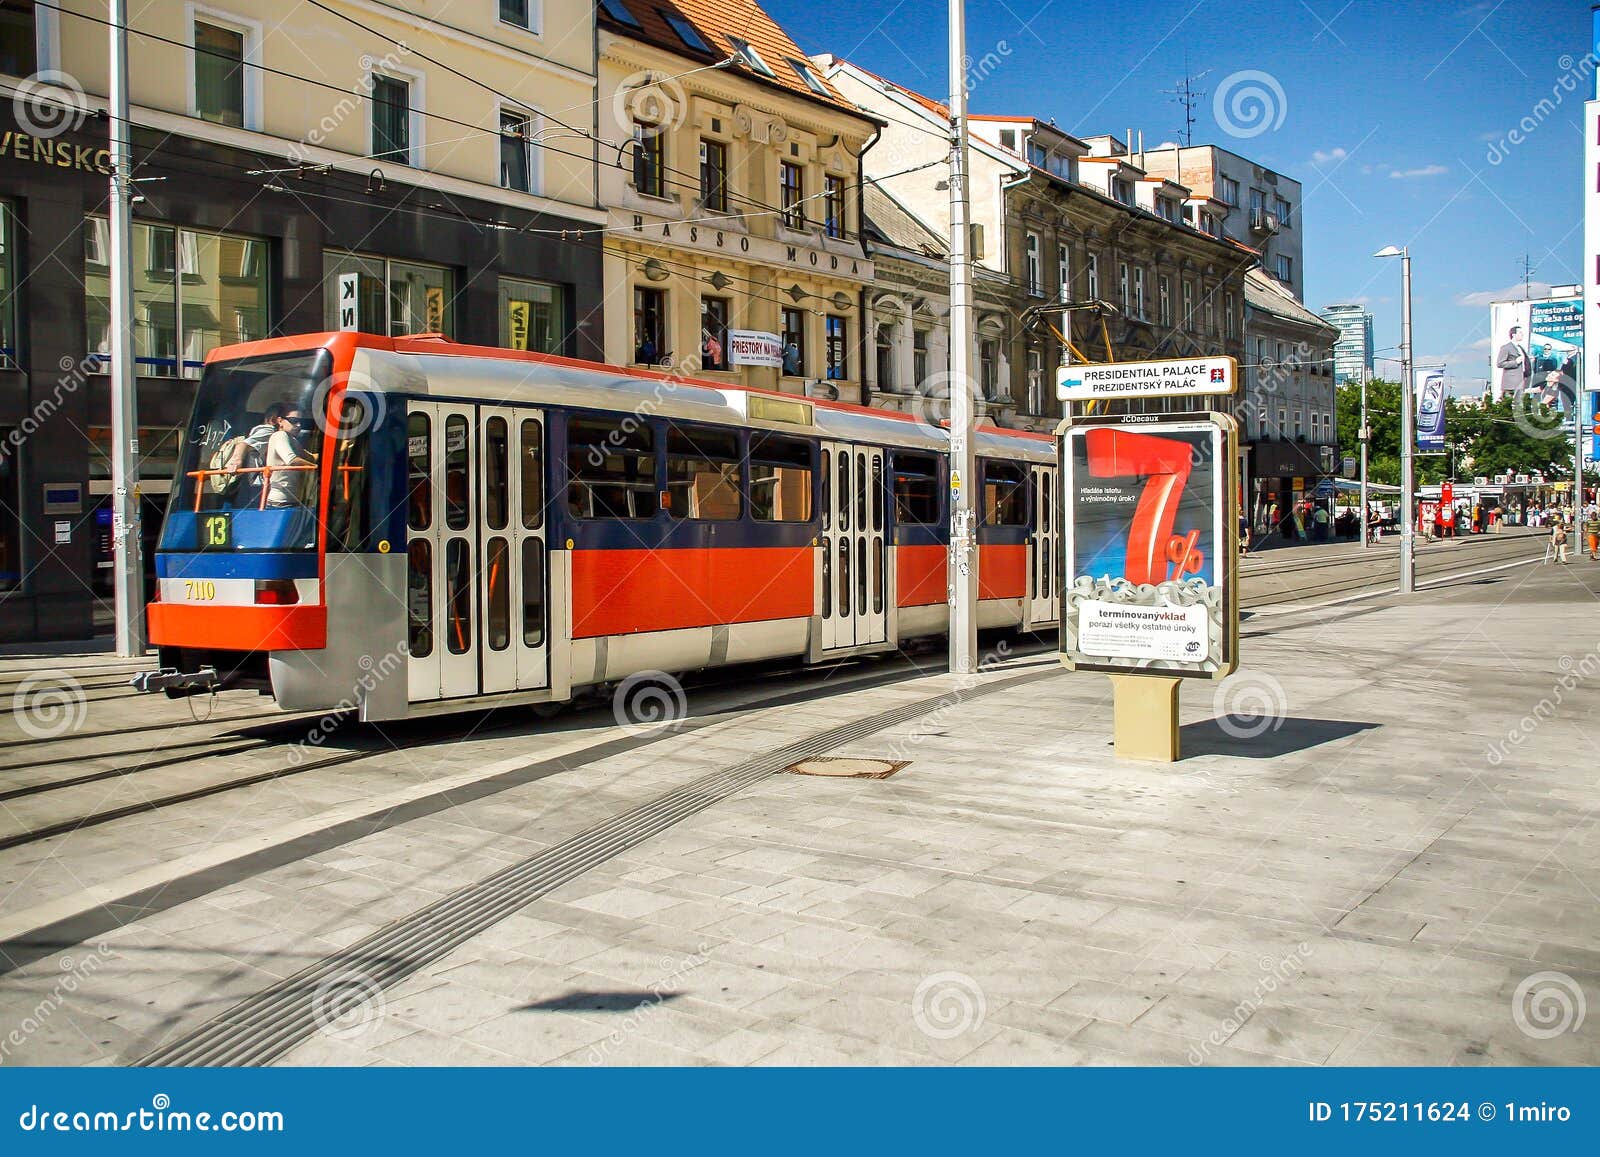 Tram in the Streets of Bratislava Editorial Stock Image - tram, streetcar: 175211624